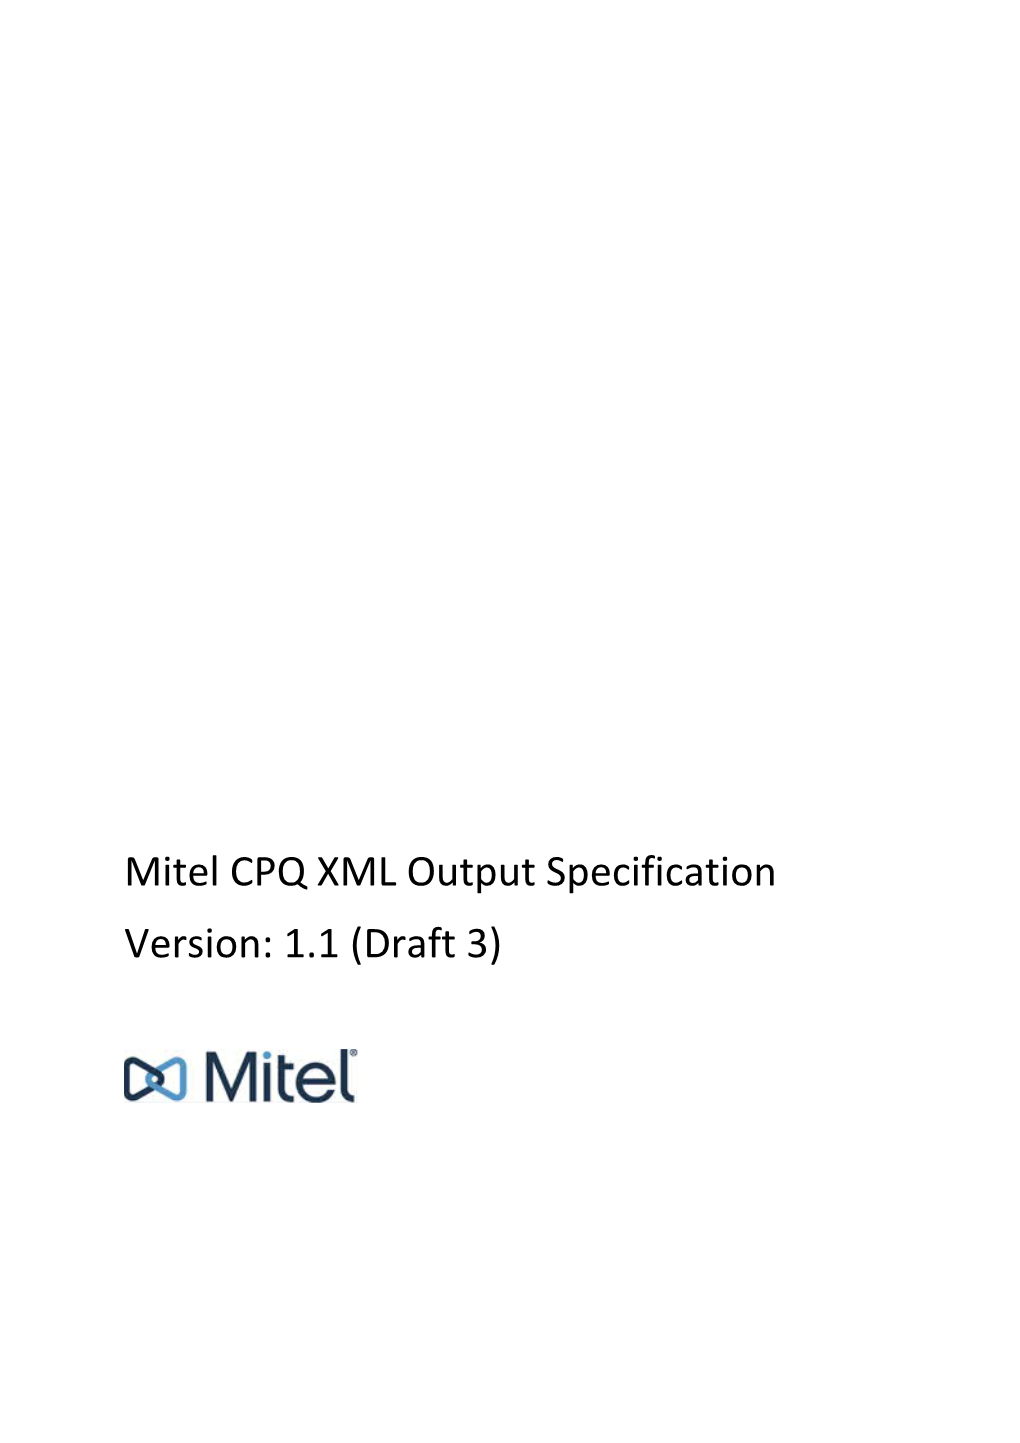 Mitel CPQ XML Output Specification